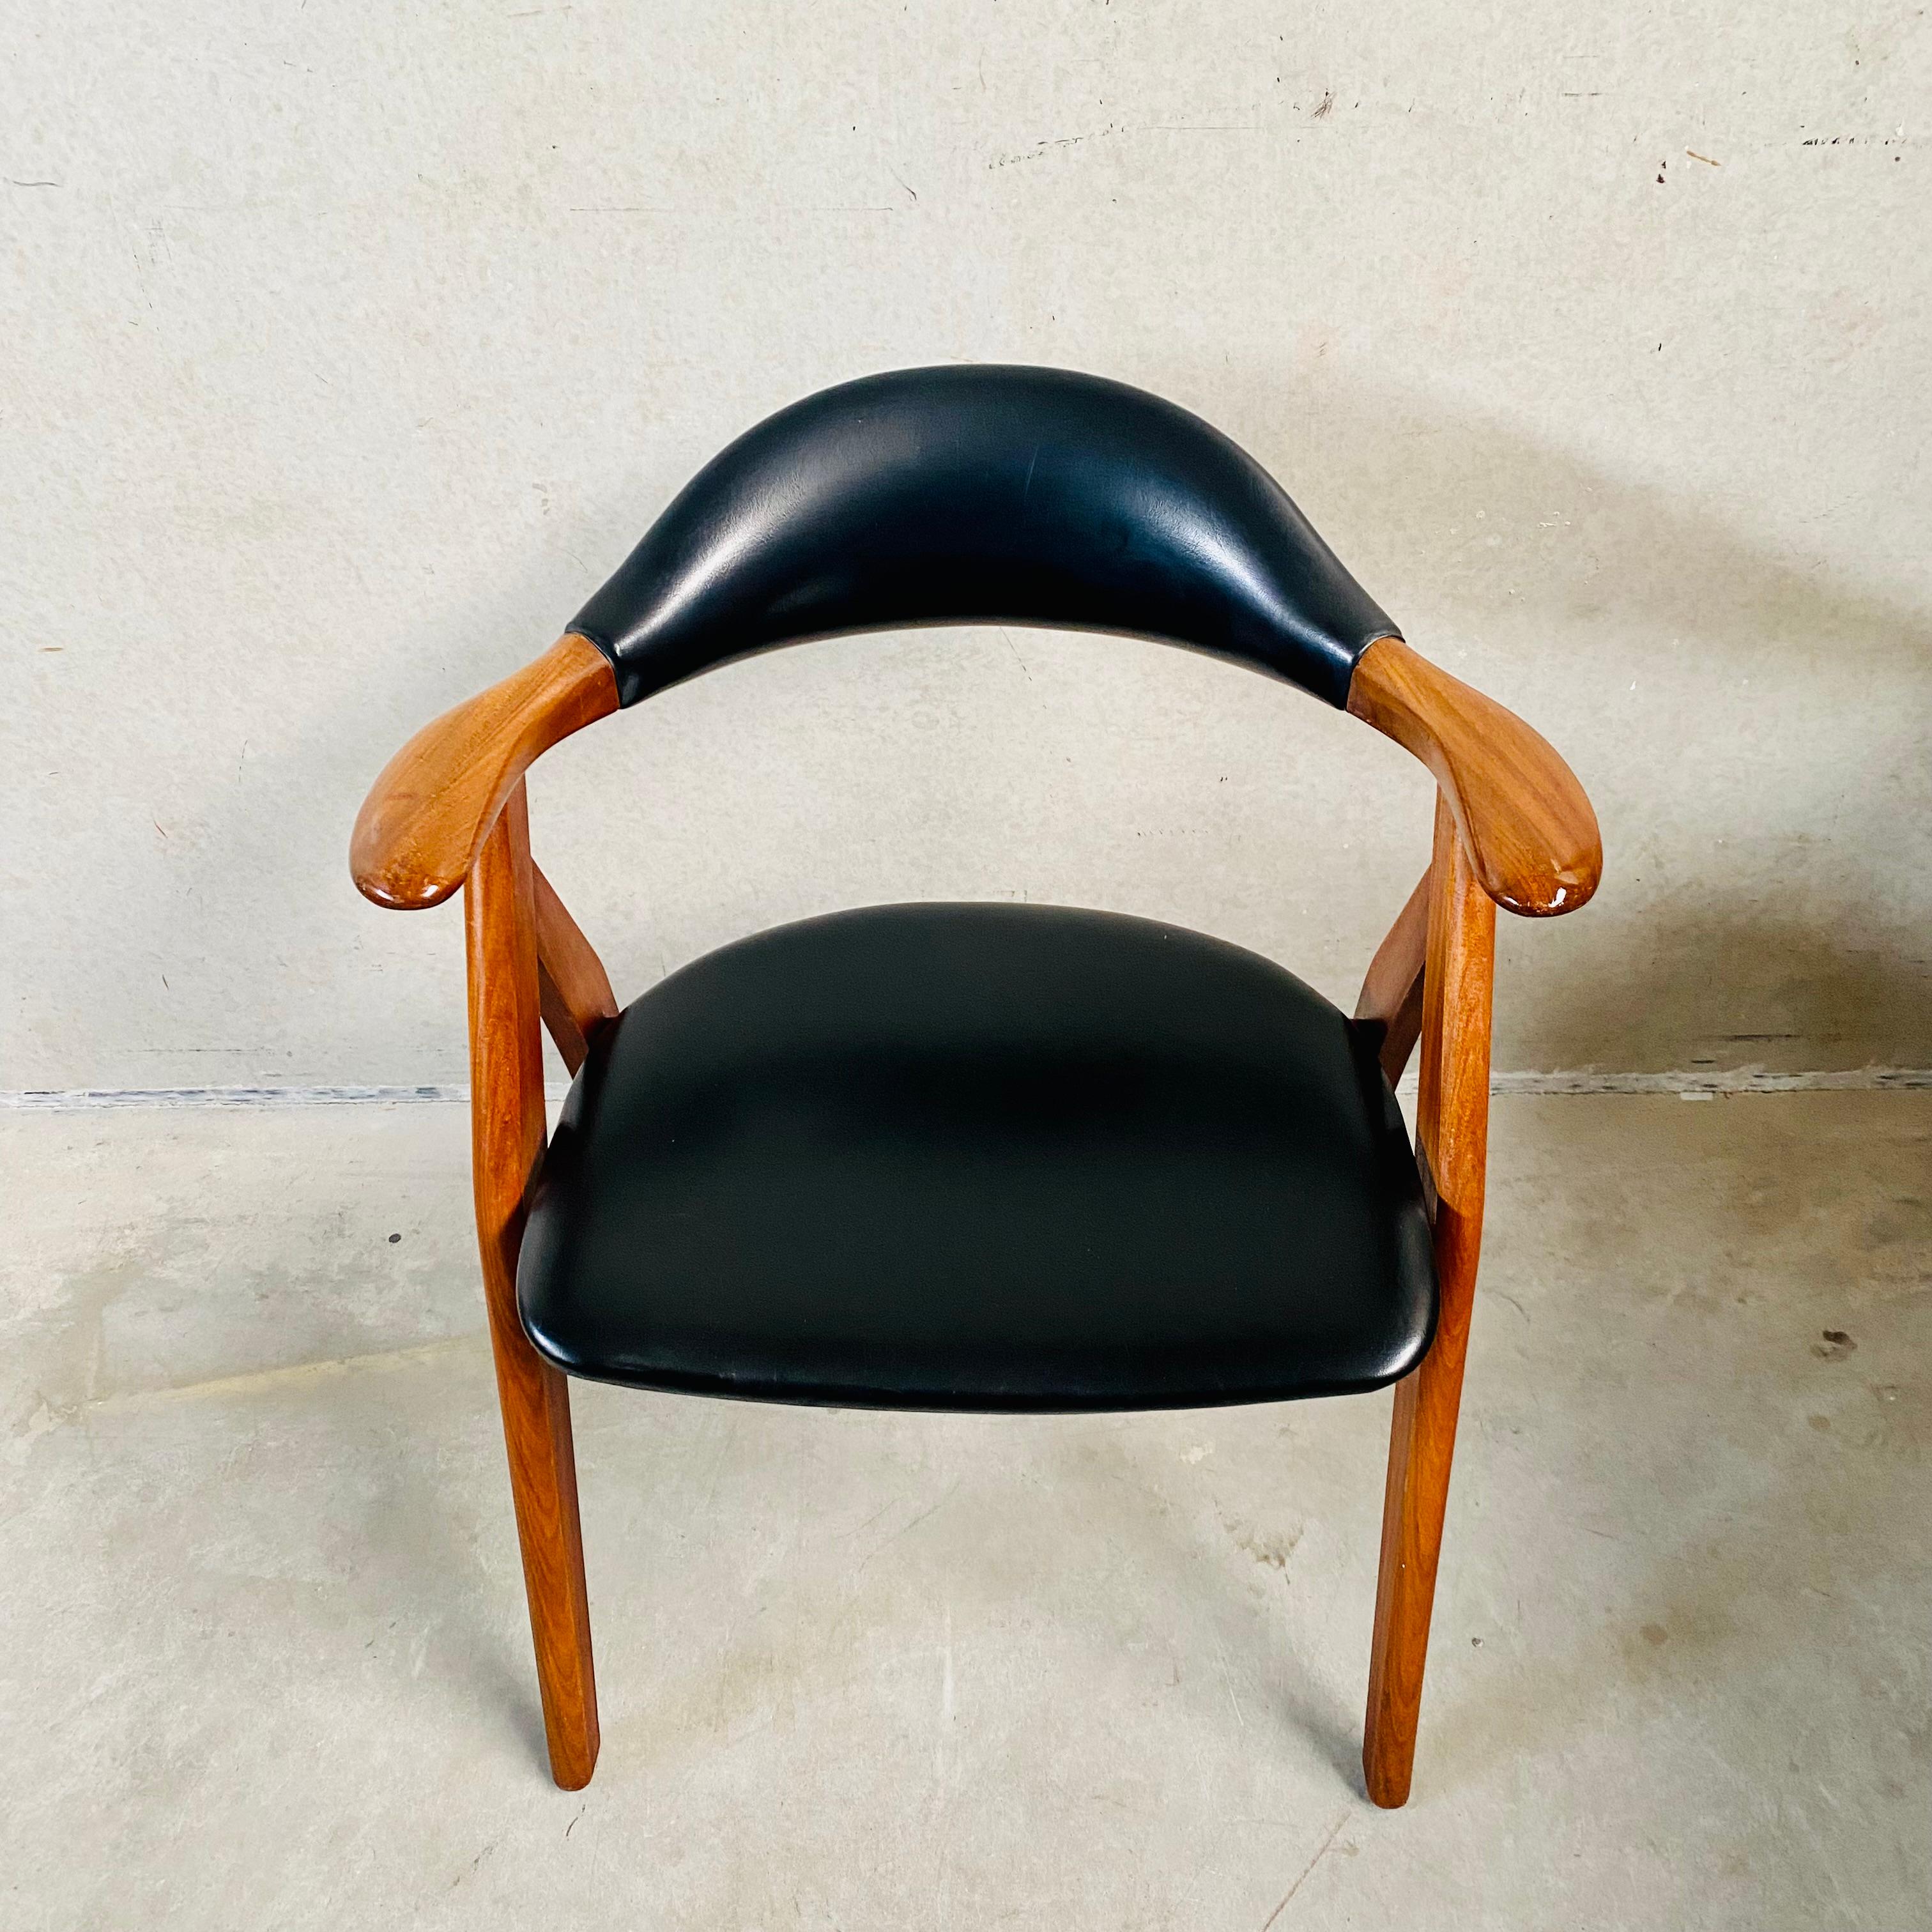 Hand-Crafted Cow Horn Chair by Tijsseling Meubelfabriek, Netherlands 1960